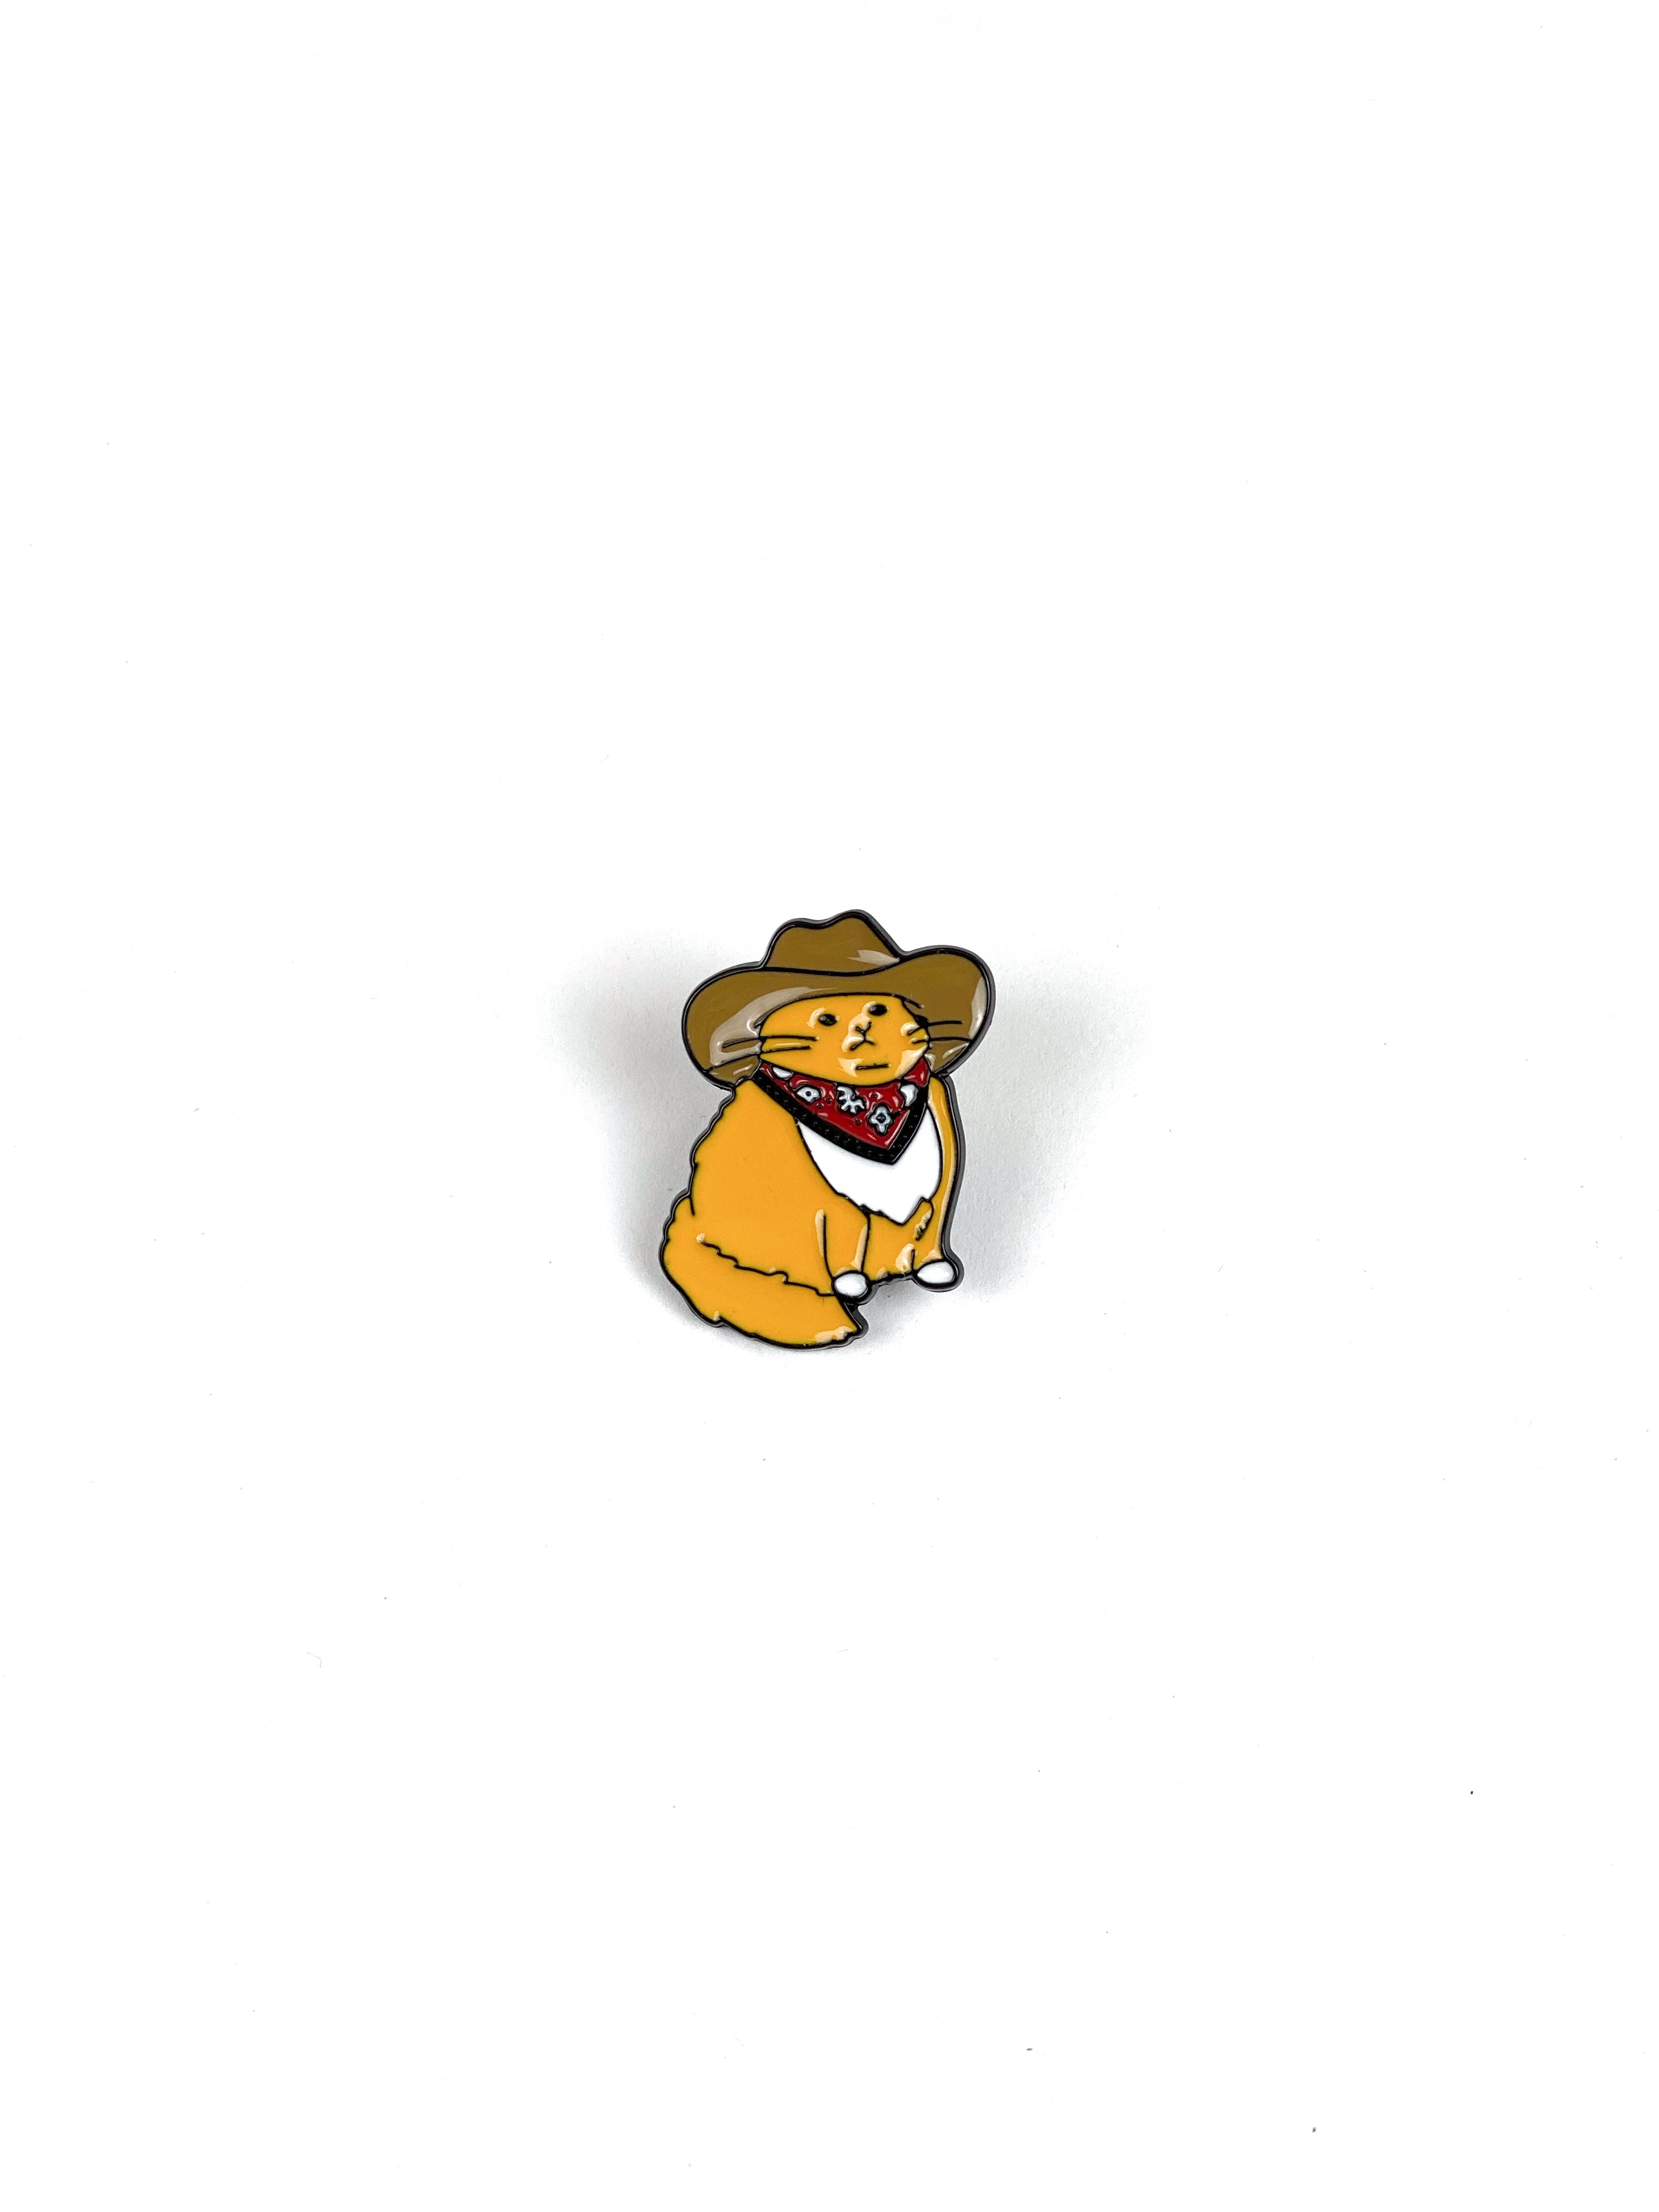 Cowboy Cat Enamel Pin, Meowdy Hard Enamel Bag Pin, Collector Pin, Project Bag Pin, Western Themed Pin